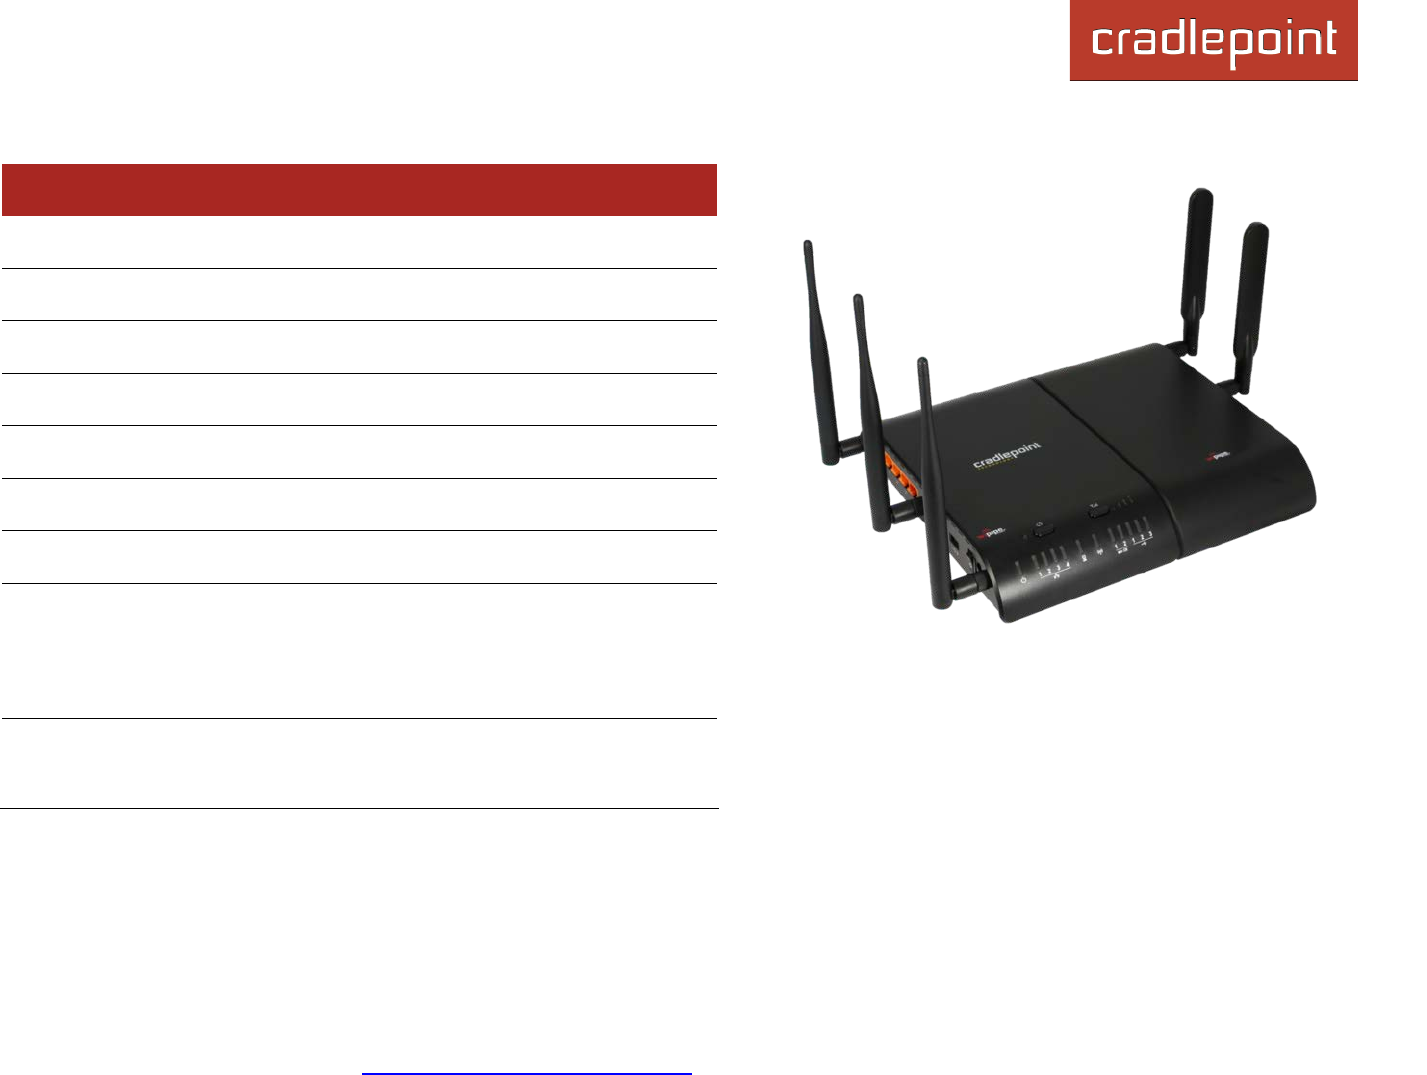 CradlePoint Mobile Broadband Router Cradlepoint_arc_mbr1400_manual Arc